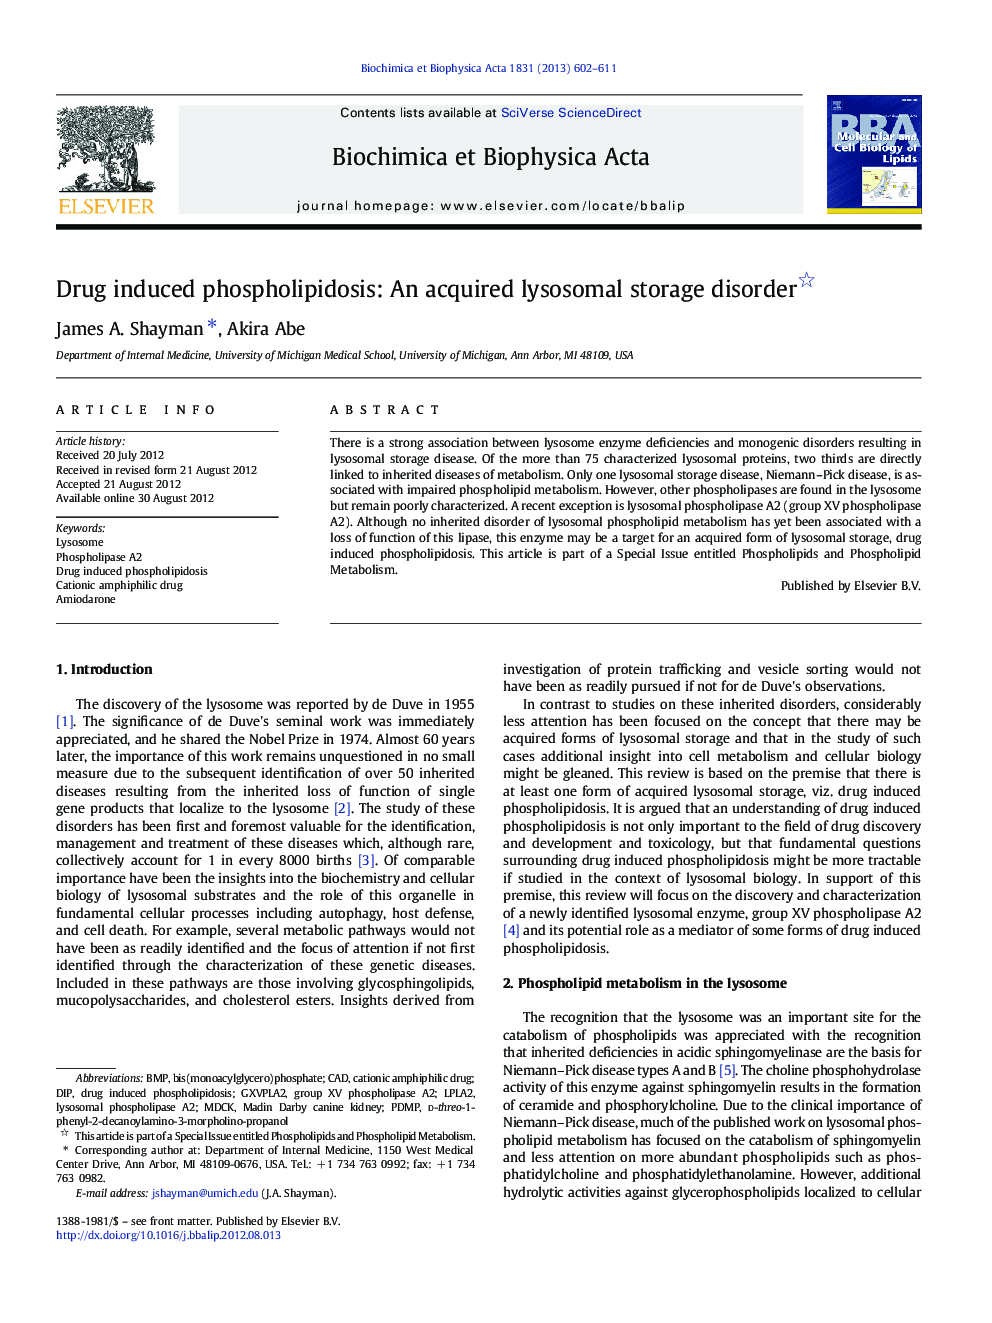 Drug induced phospholipidosis: An acquired lysosomal storage disorder